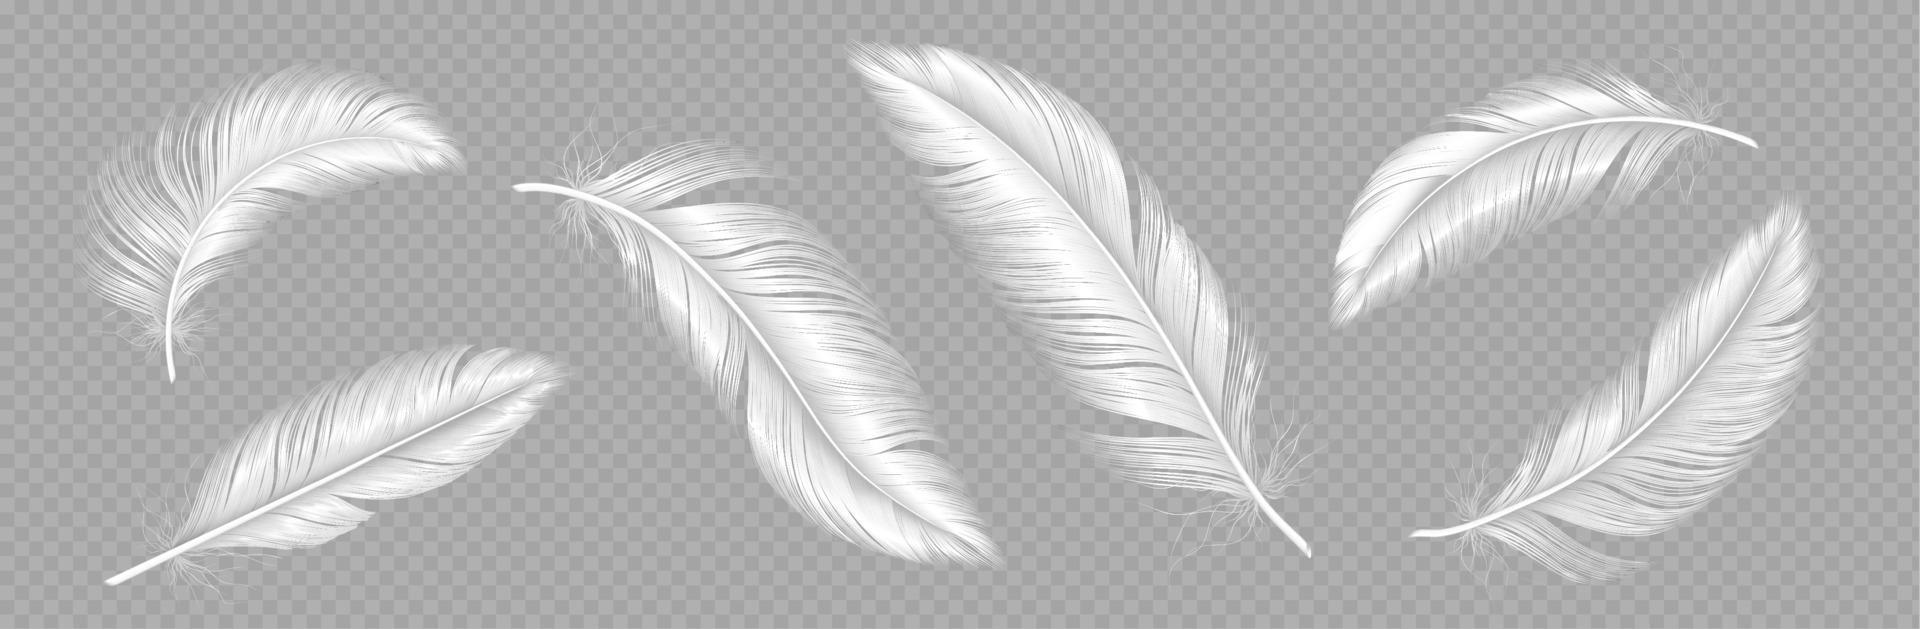 pluma blanca suave, conjunto de plumaje de pájaro vector